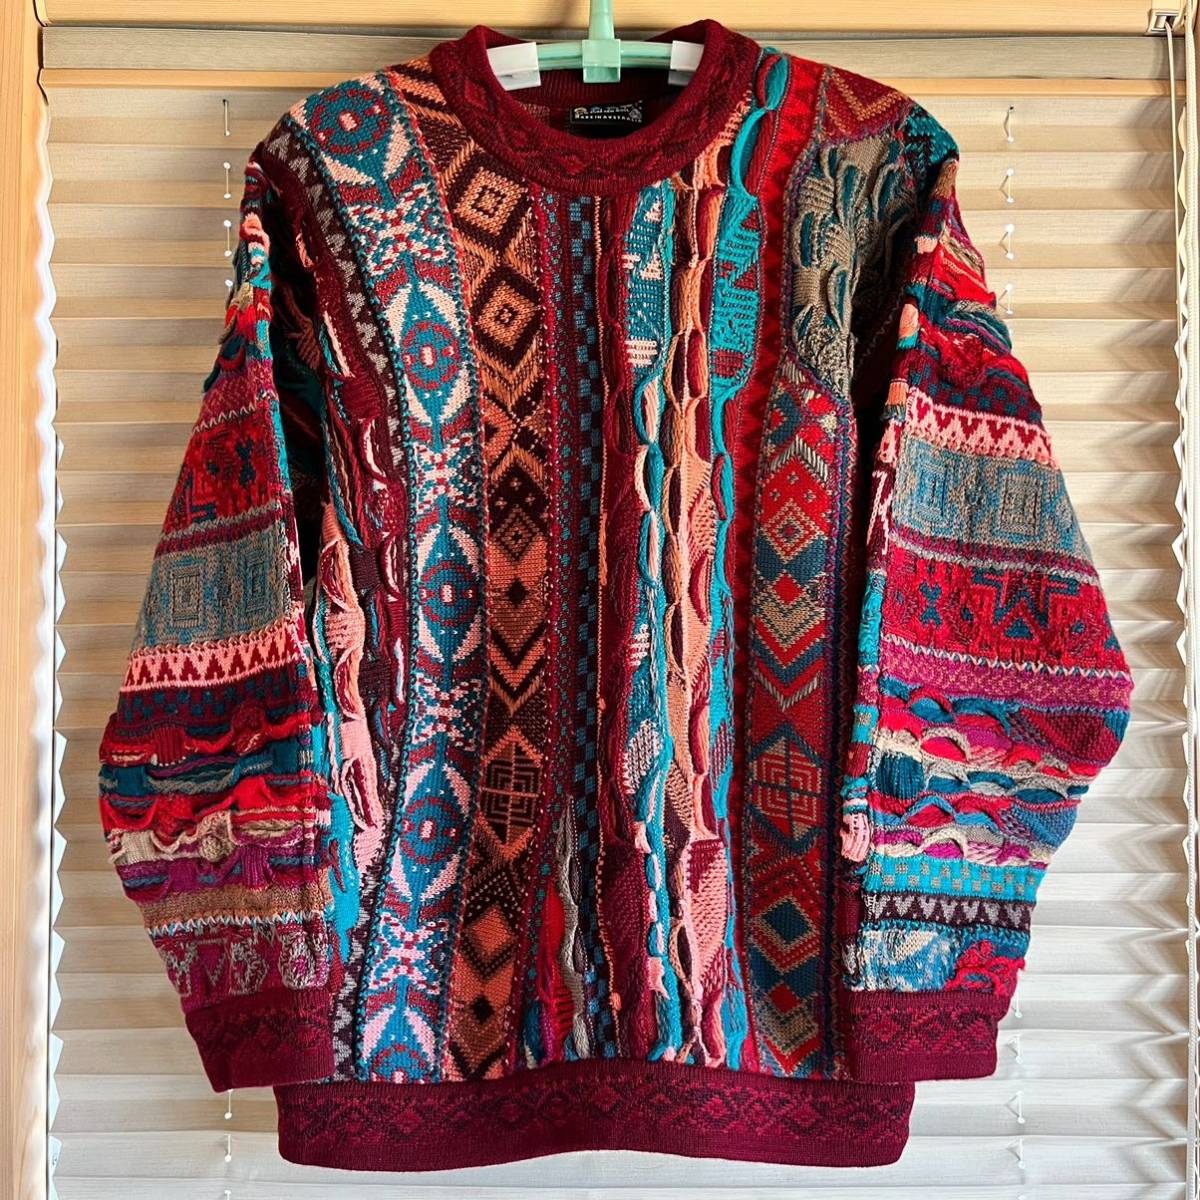 COOGI multi color sweater クージー セーター australia